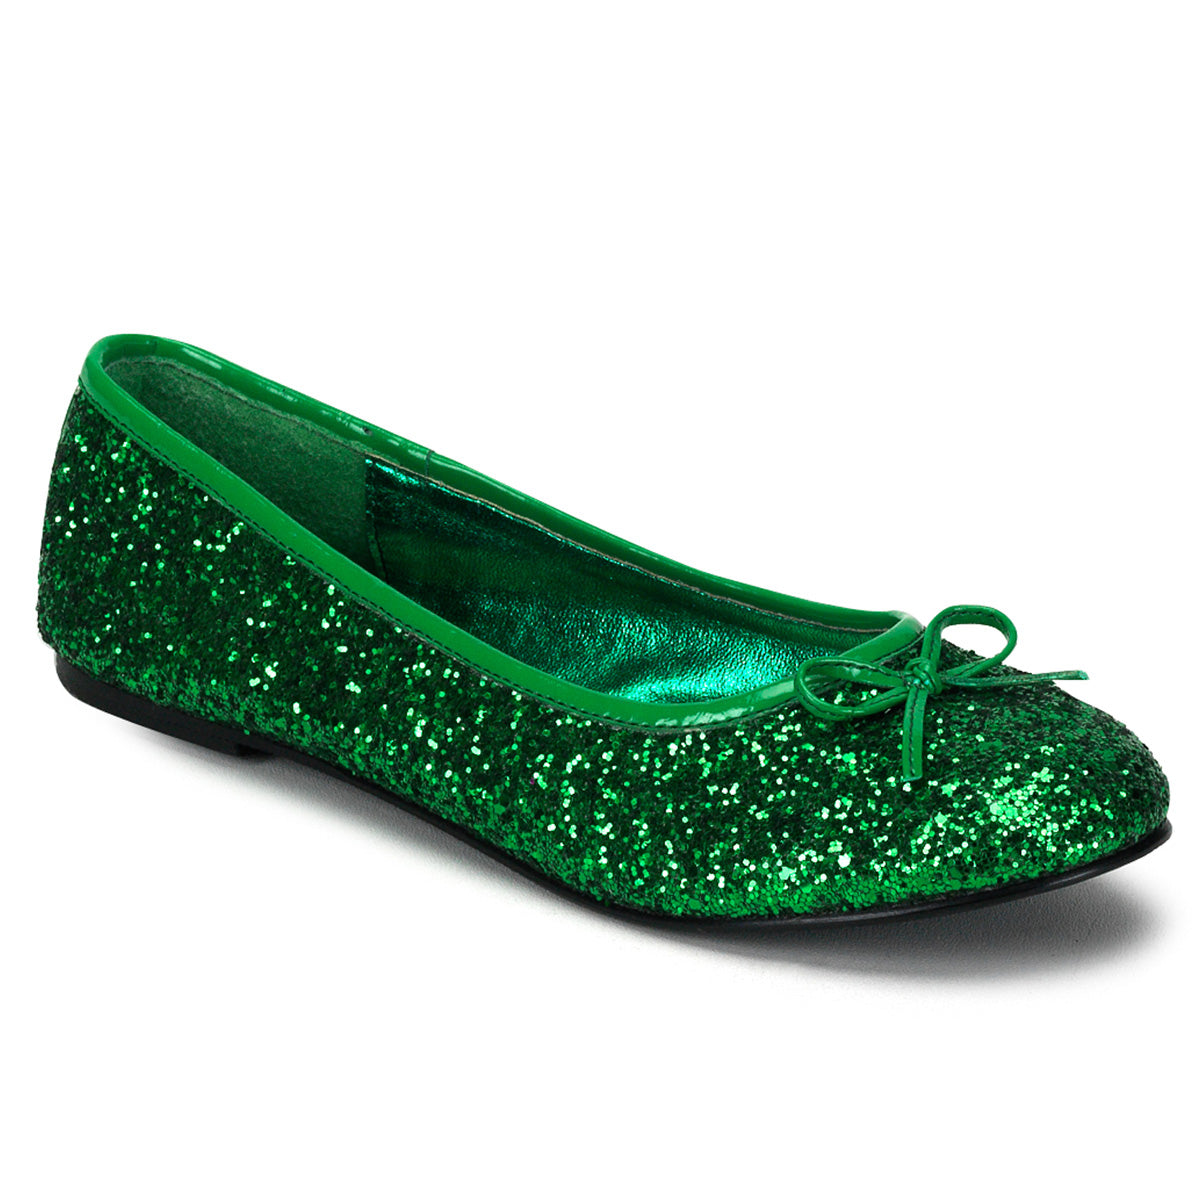 STAR-16G Pleasers Funtasma Green Glitter Women's Sexy Shoes